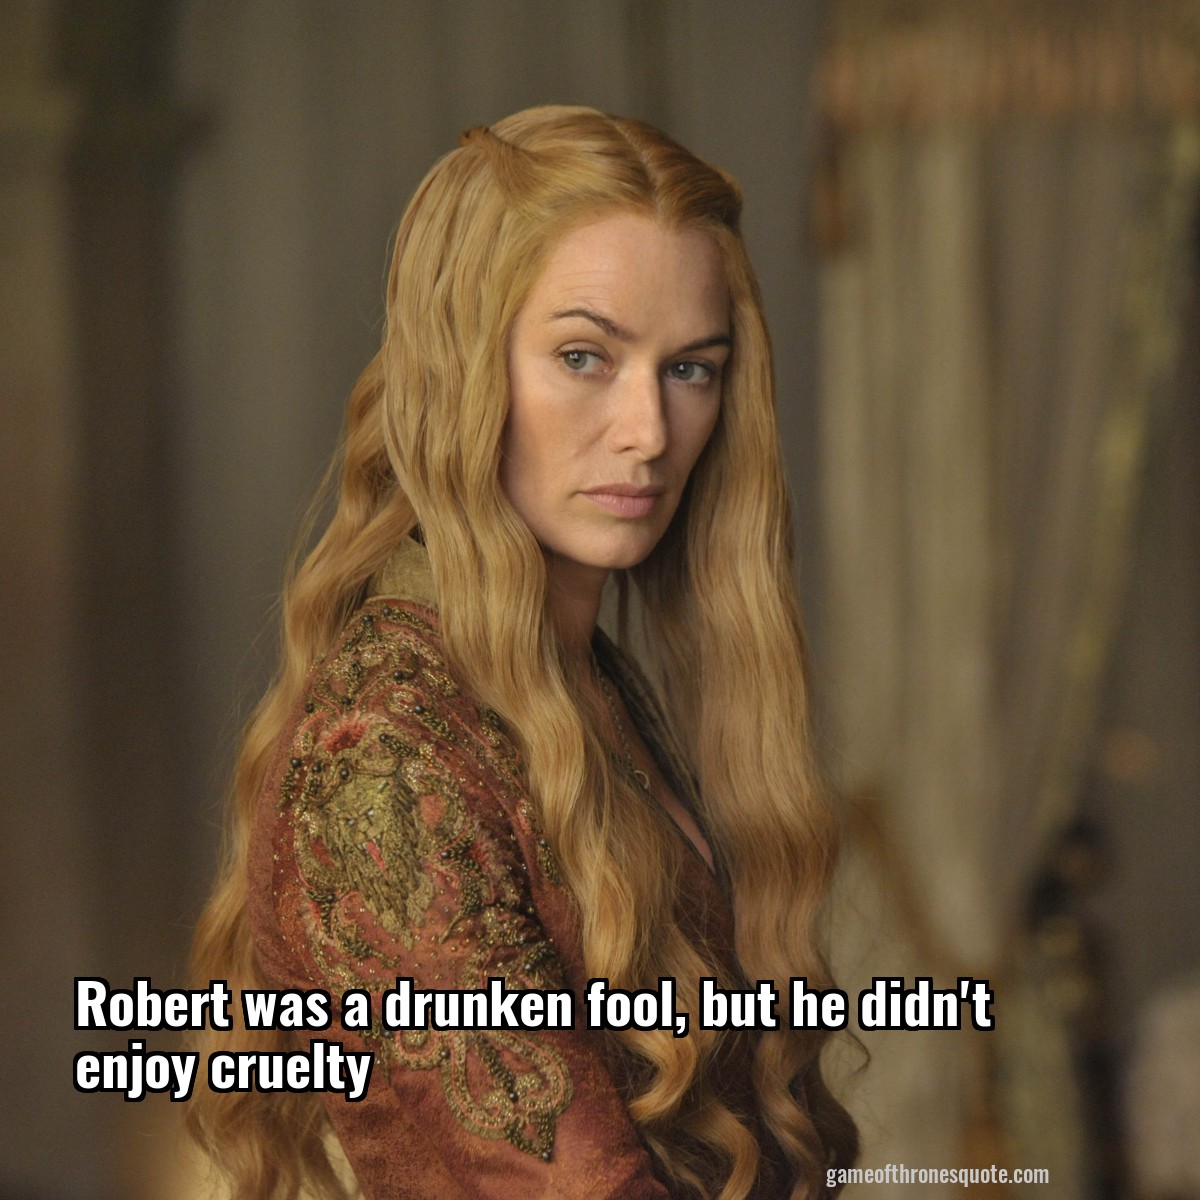 Robert was a drunken fool, but he didn't enjoy cruelty